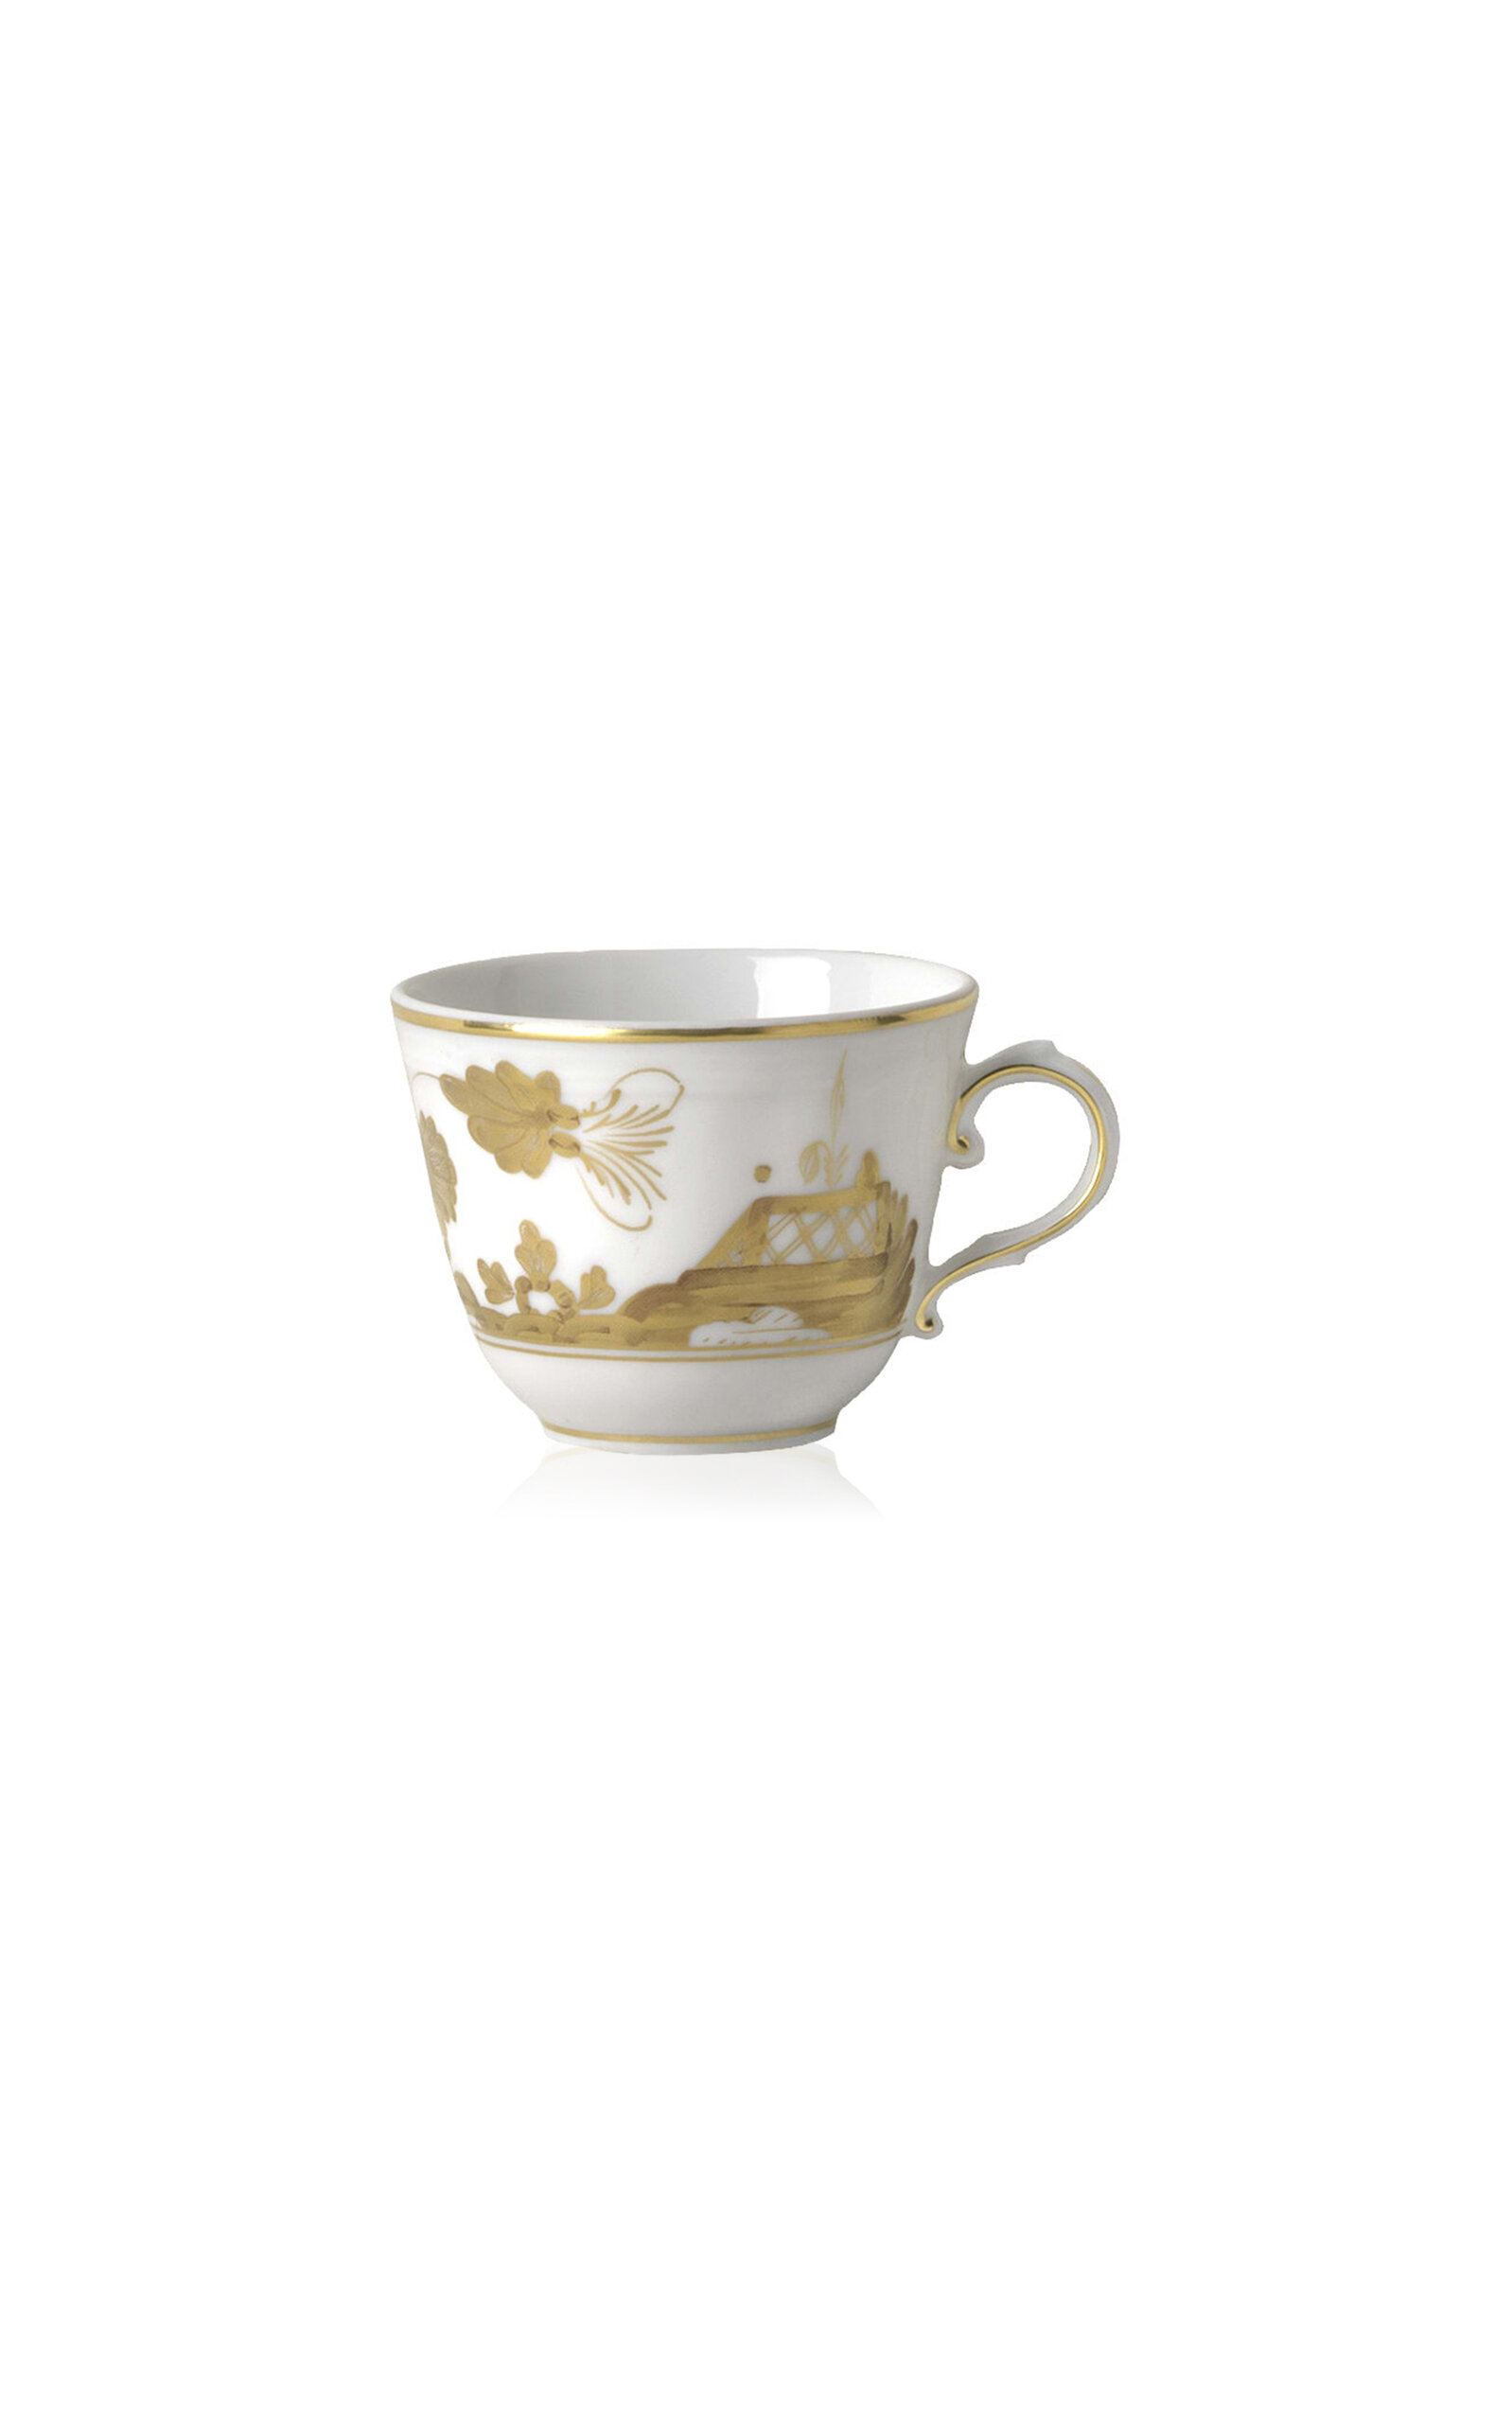 Ginori 1735 Antico Doccia Porcelain Coffee Cup In White